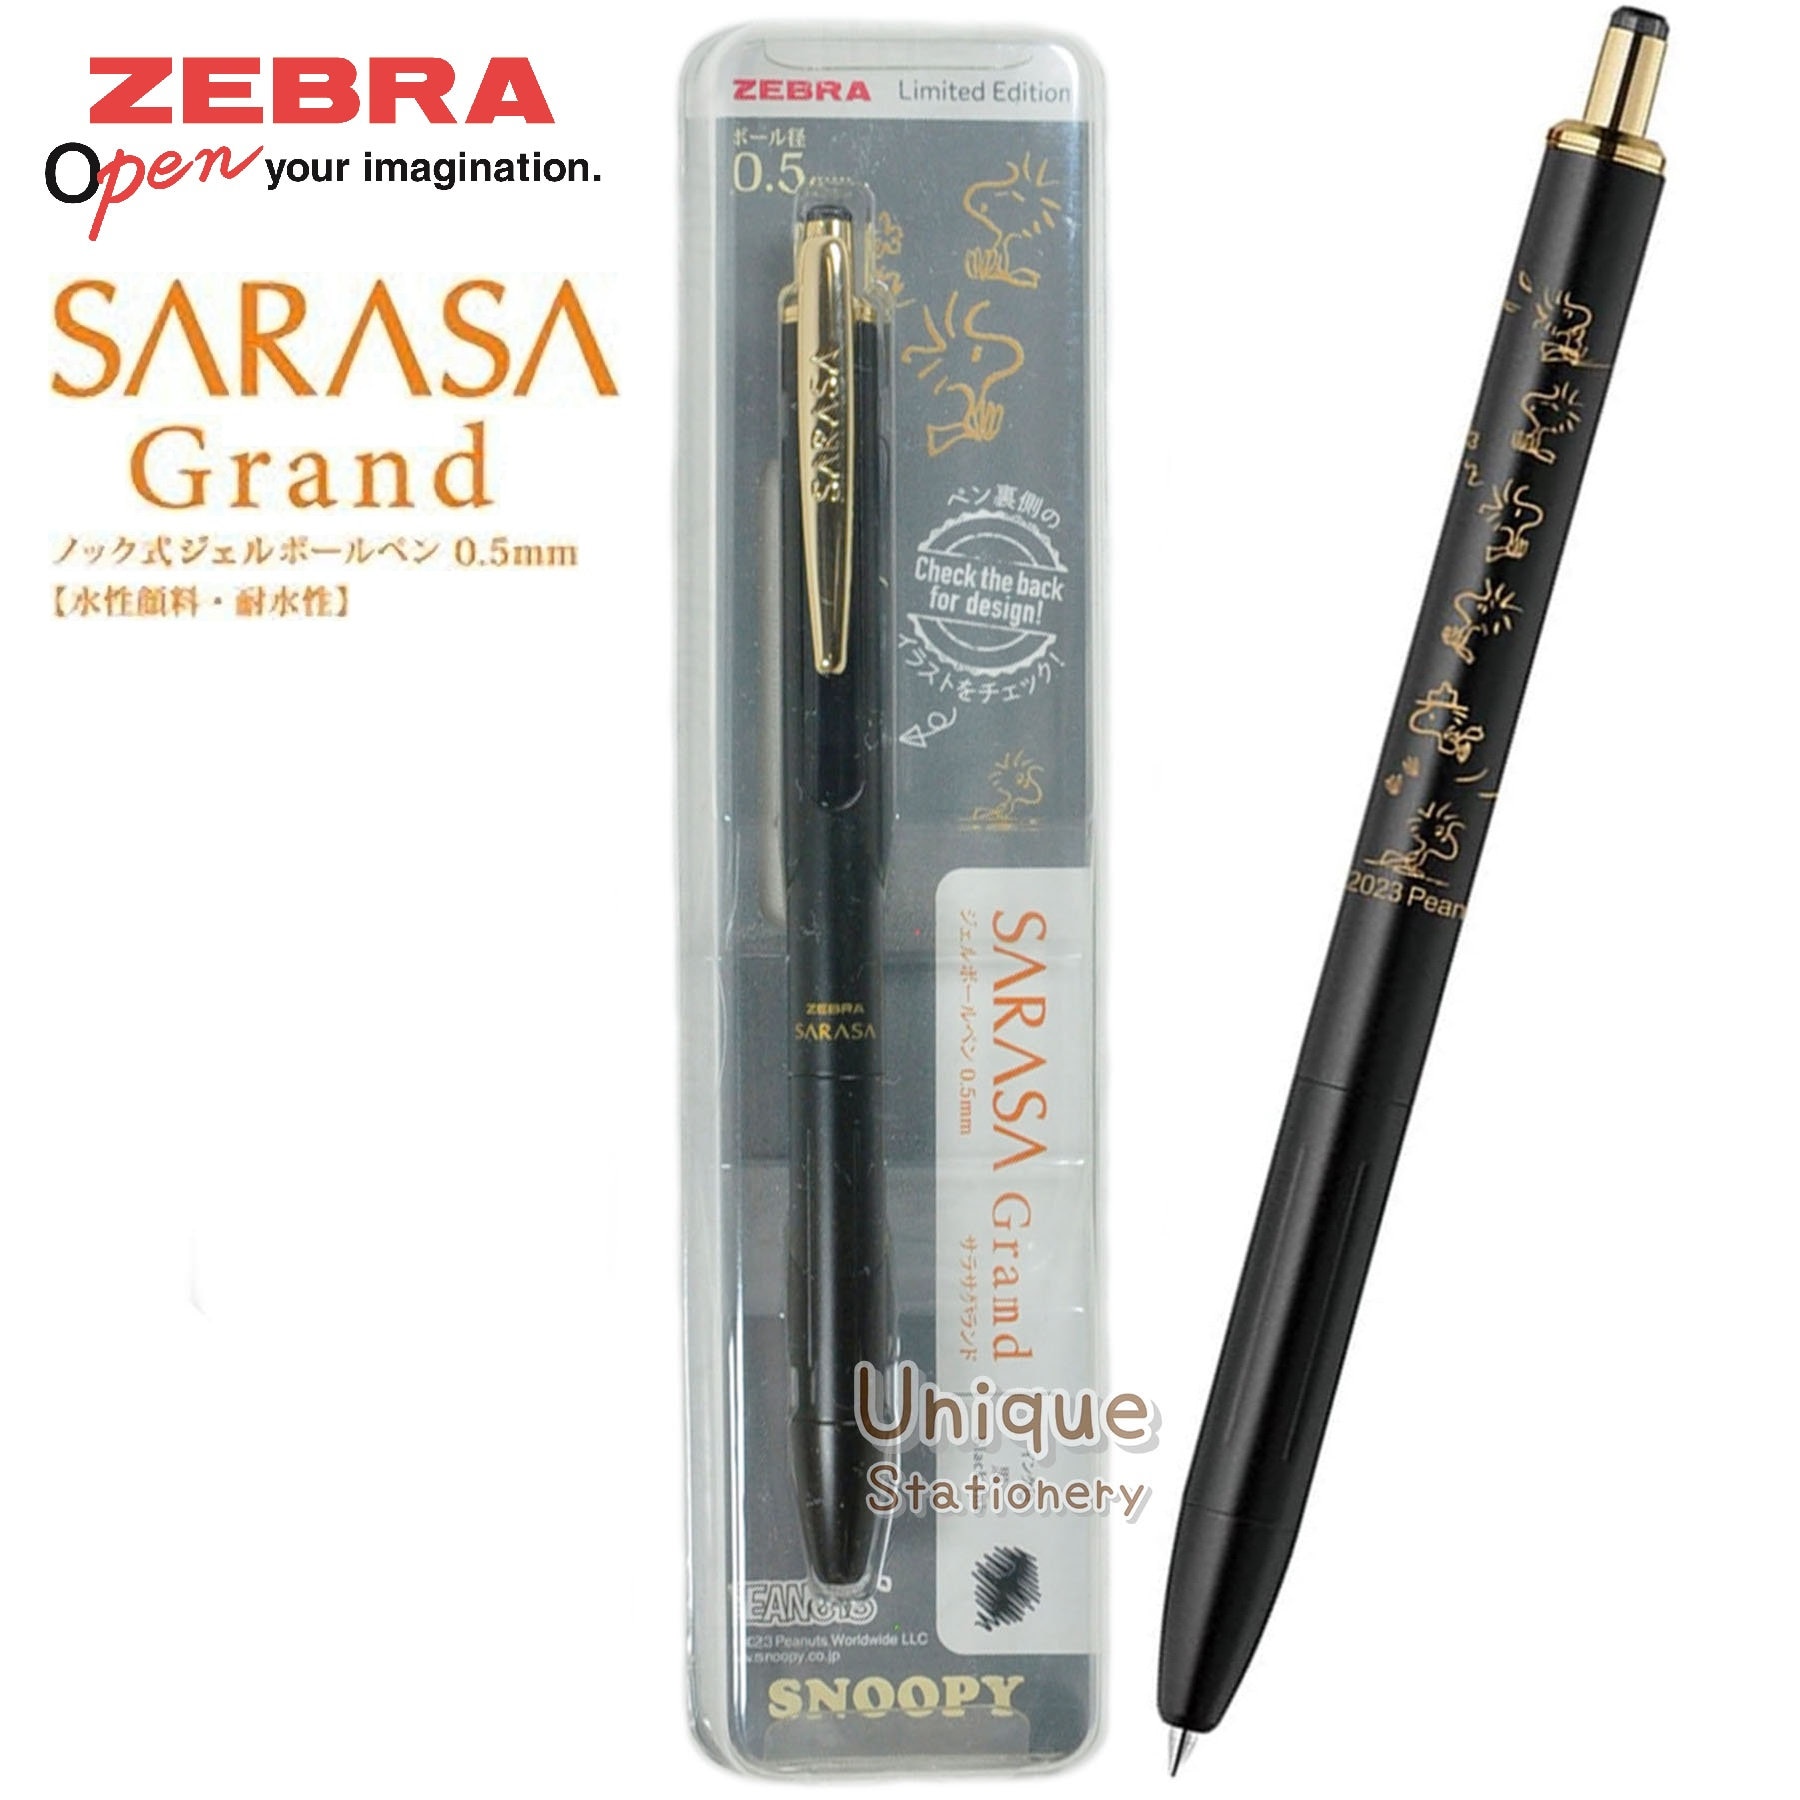 Snoopy Zebra SARASA Vintage Color Pens Set Limited Edition Green